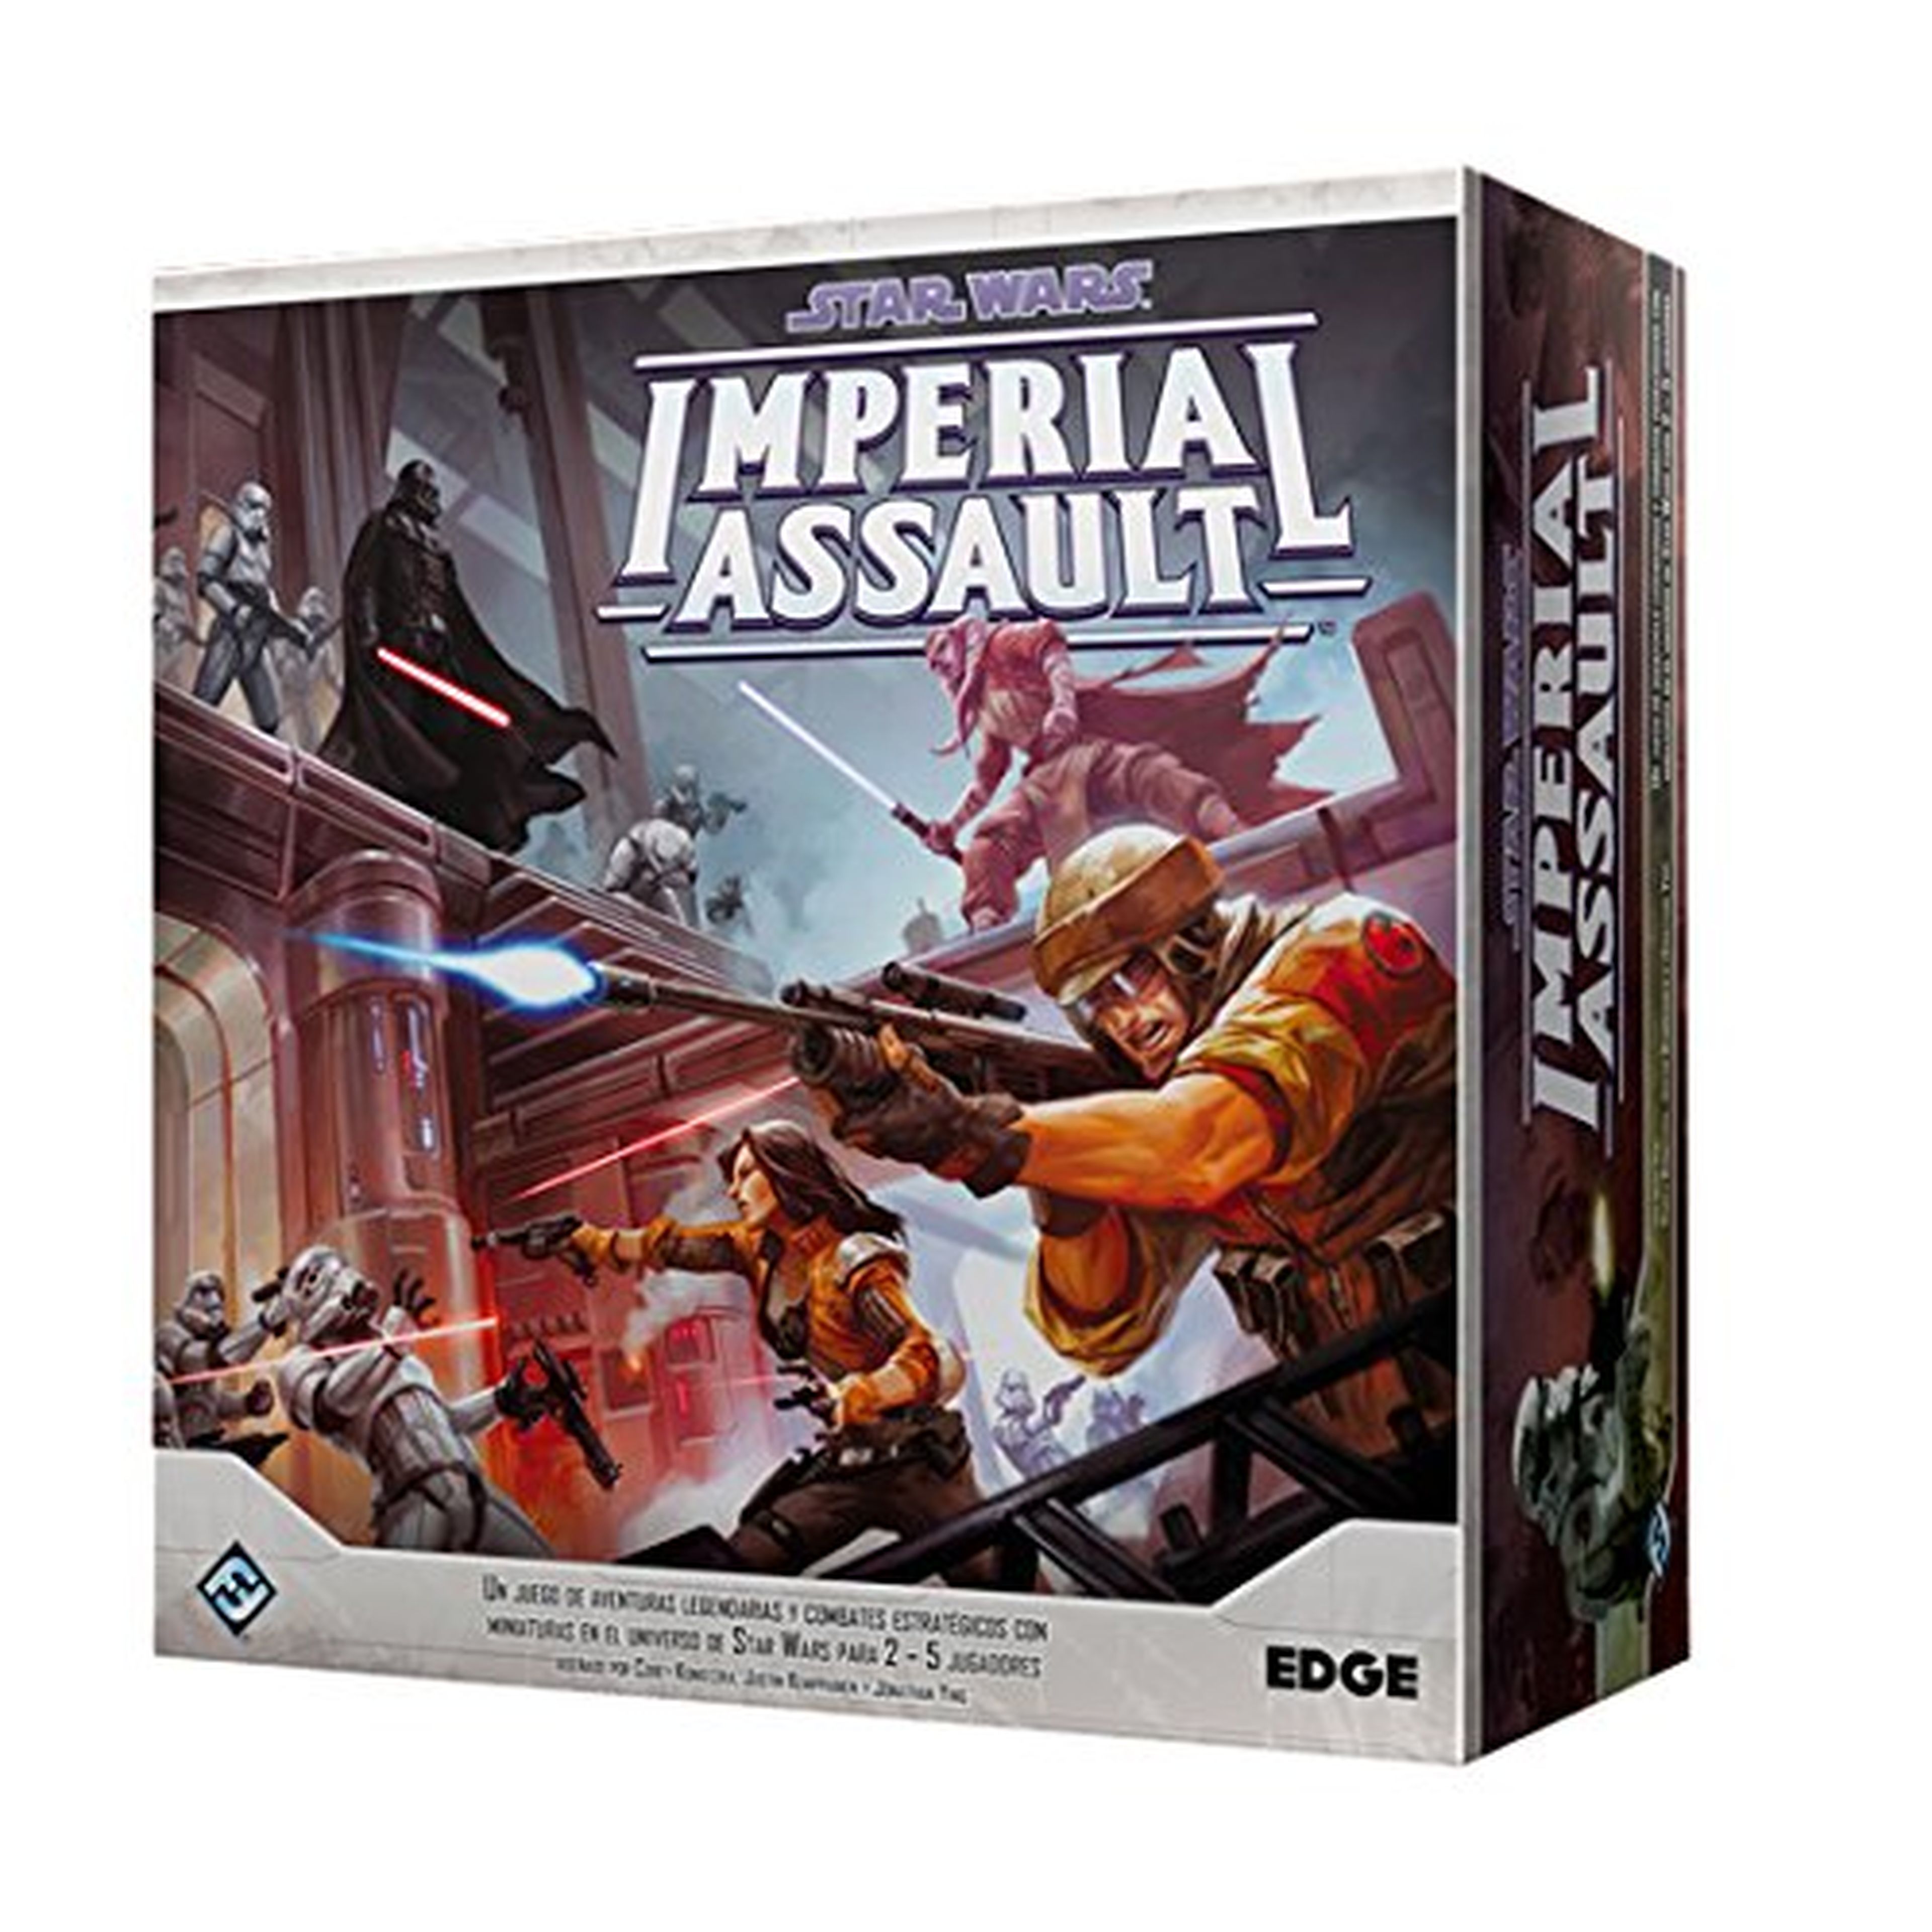 21. Star Wars Imperial Assault